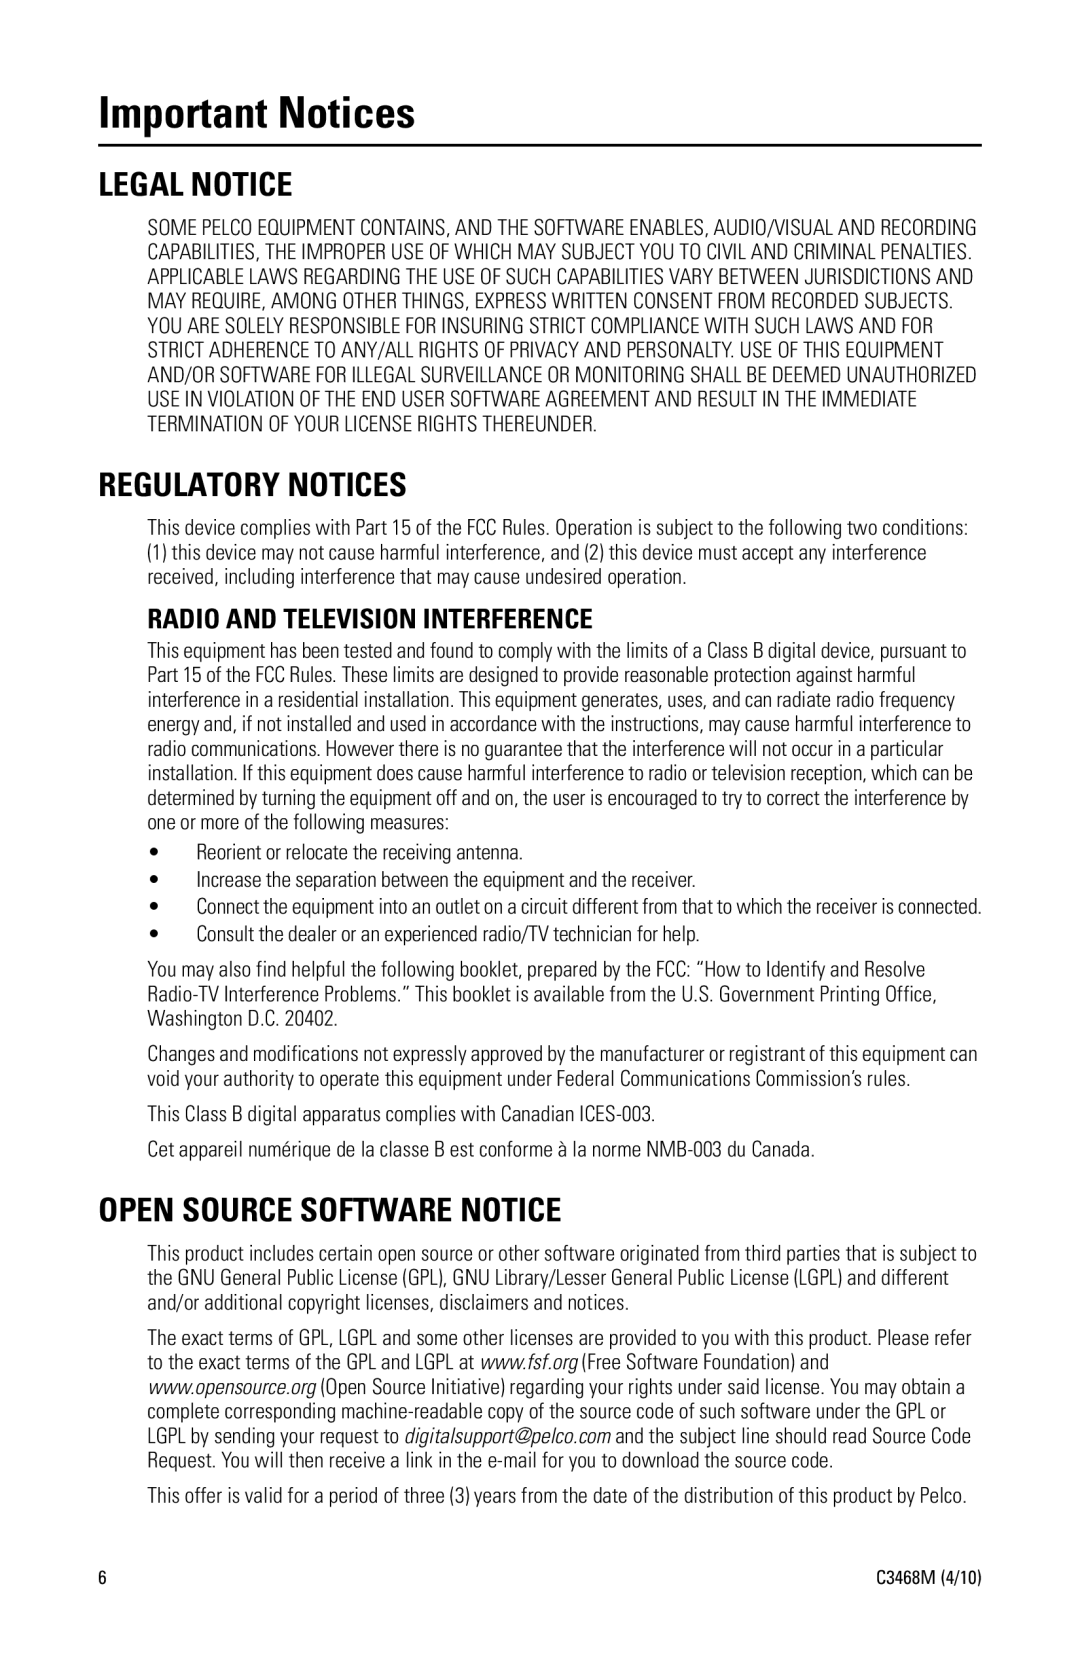 Pelco C3468M manual Important Notices, Legal Notice, Regulatory Notices, Open Source Software Notice 